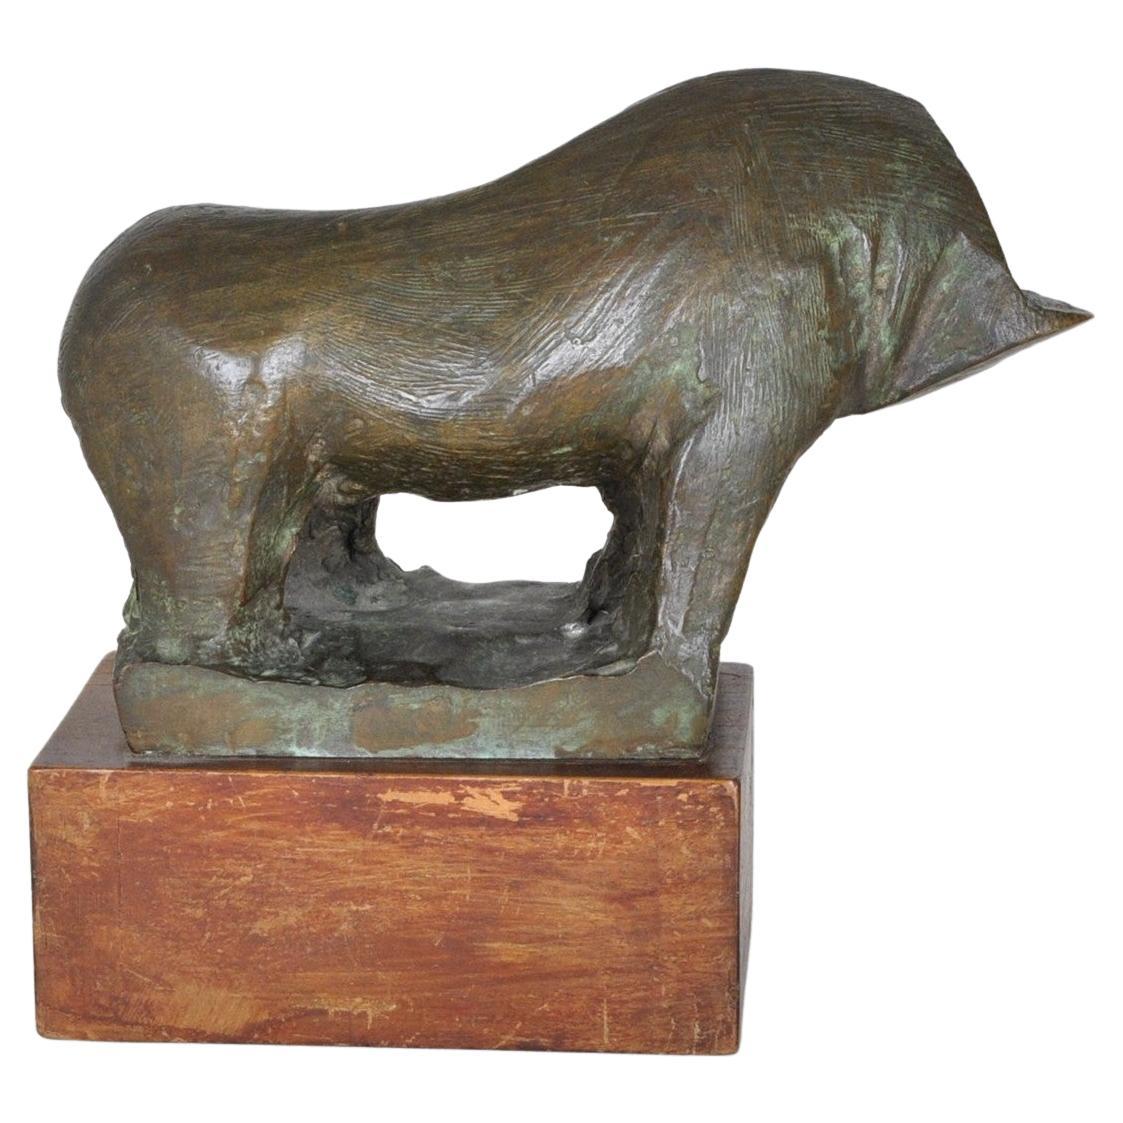 Headless Animal, Bronze Sculpture, 50s/60s